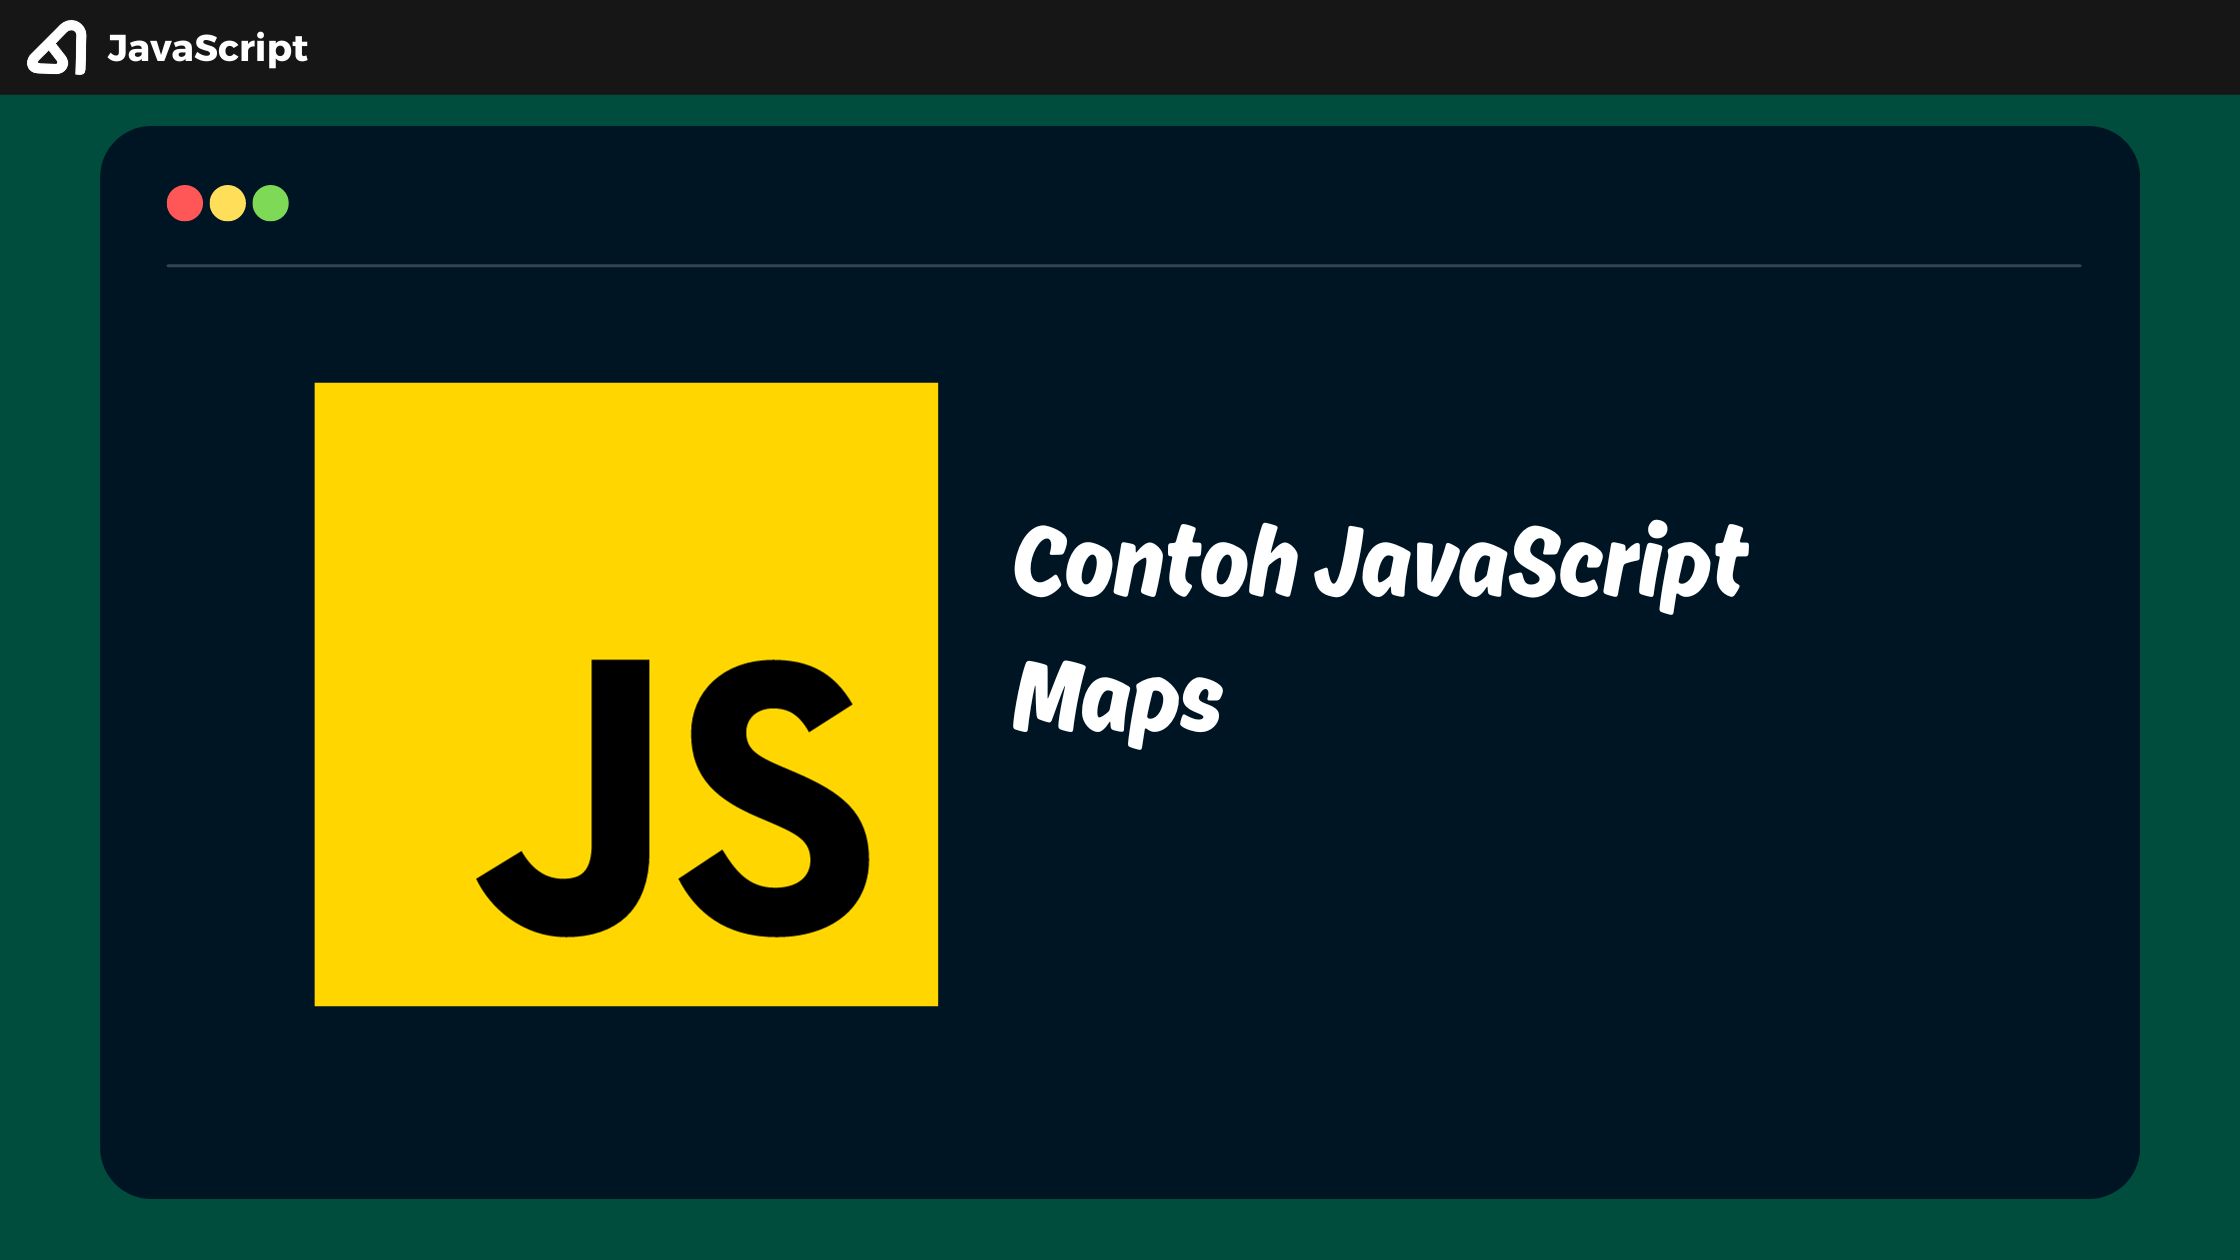 Contoh JavaScript Maps